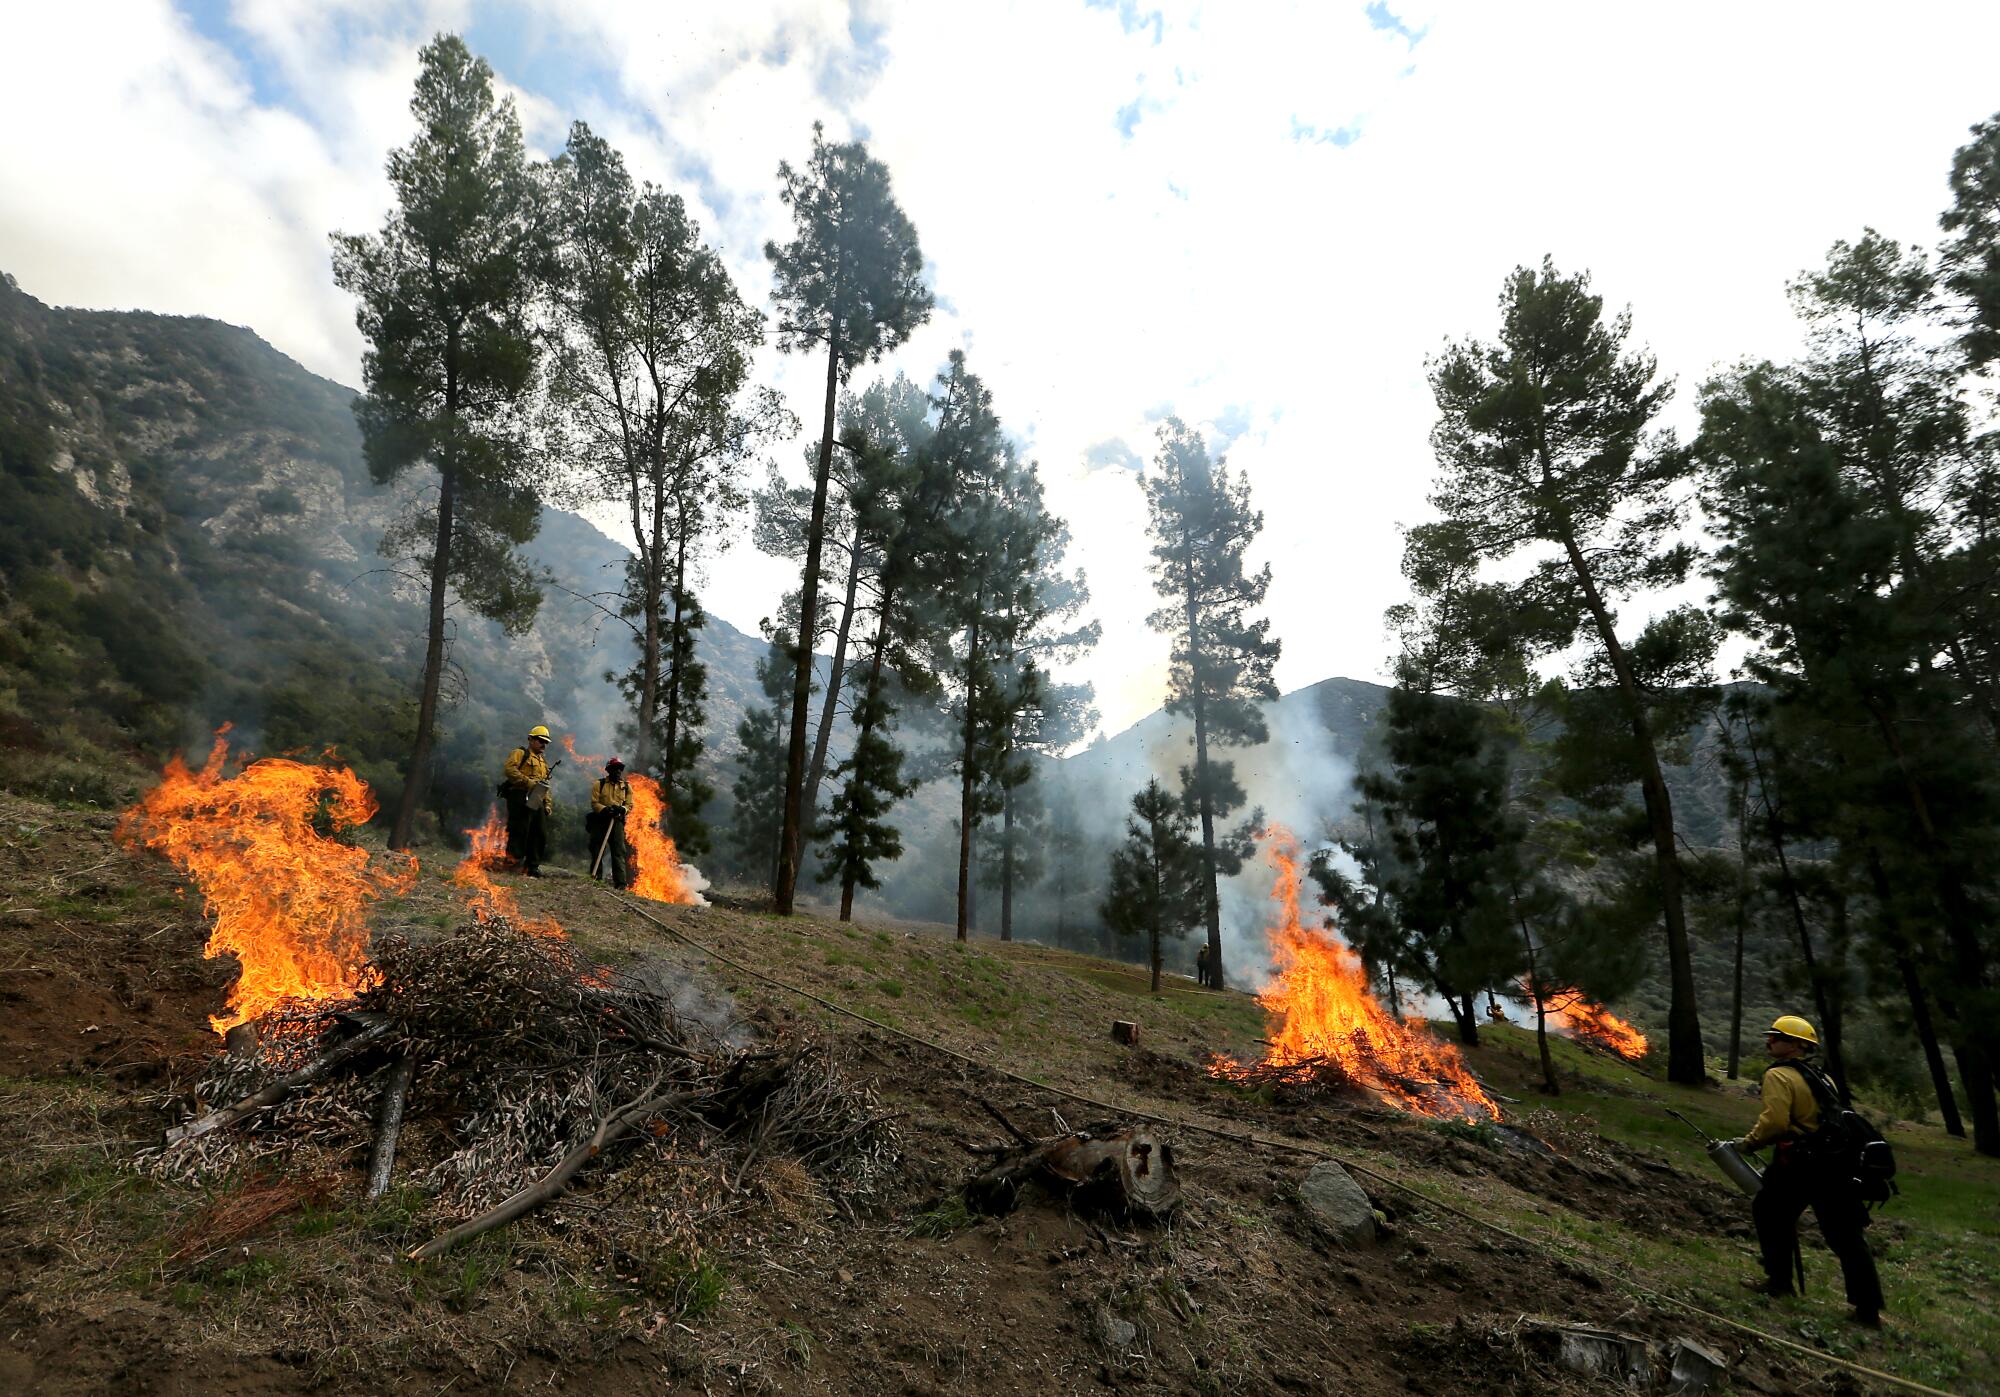 Piles of debris burn on a forested hillside.